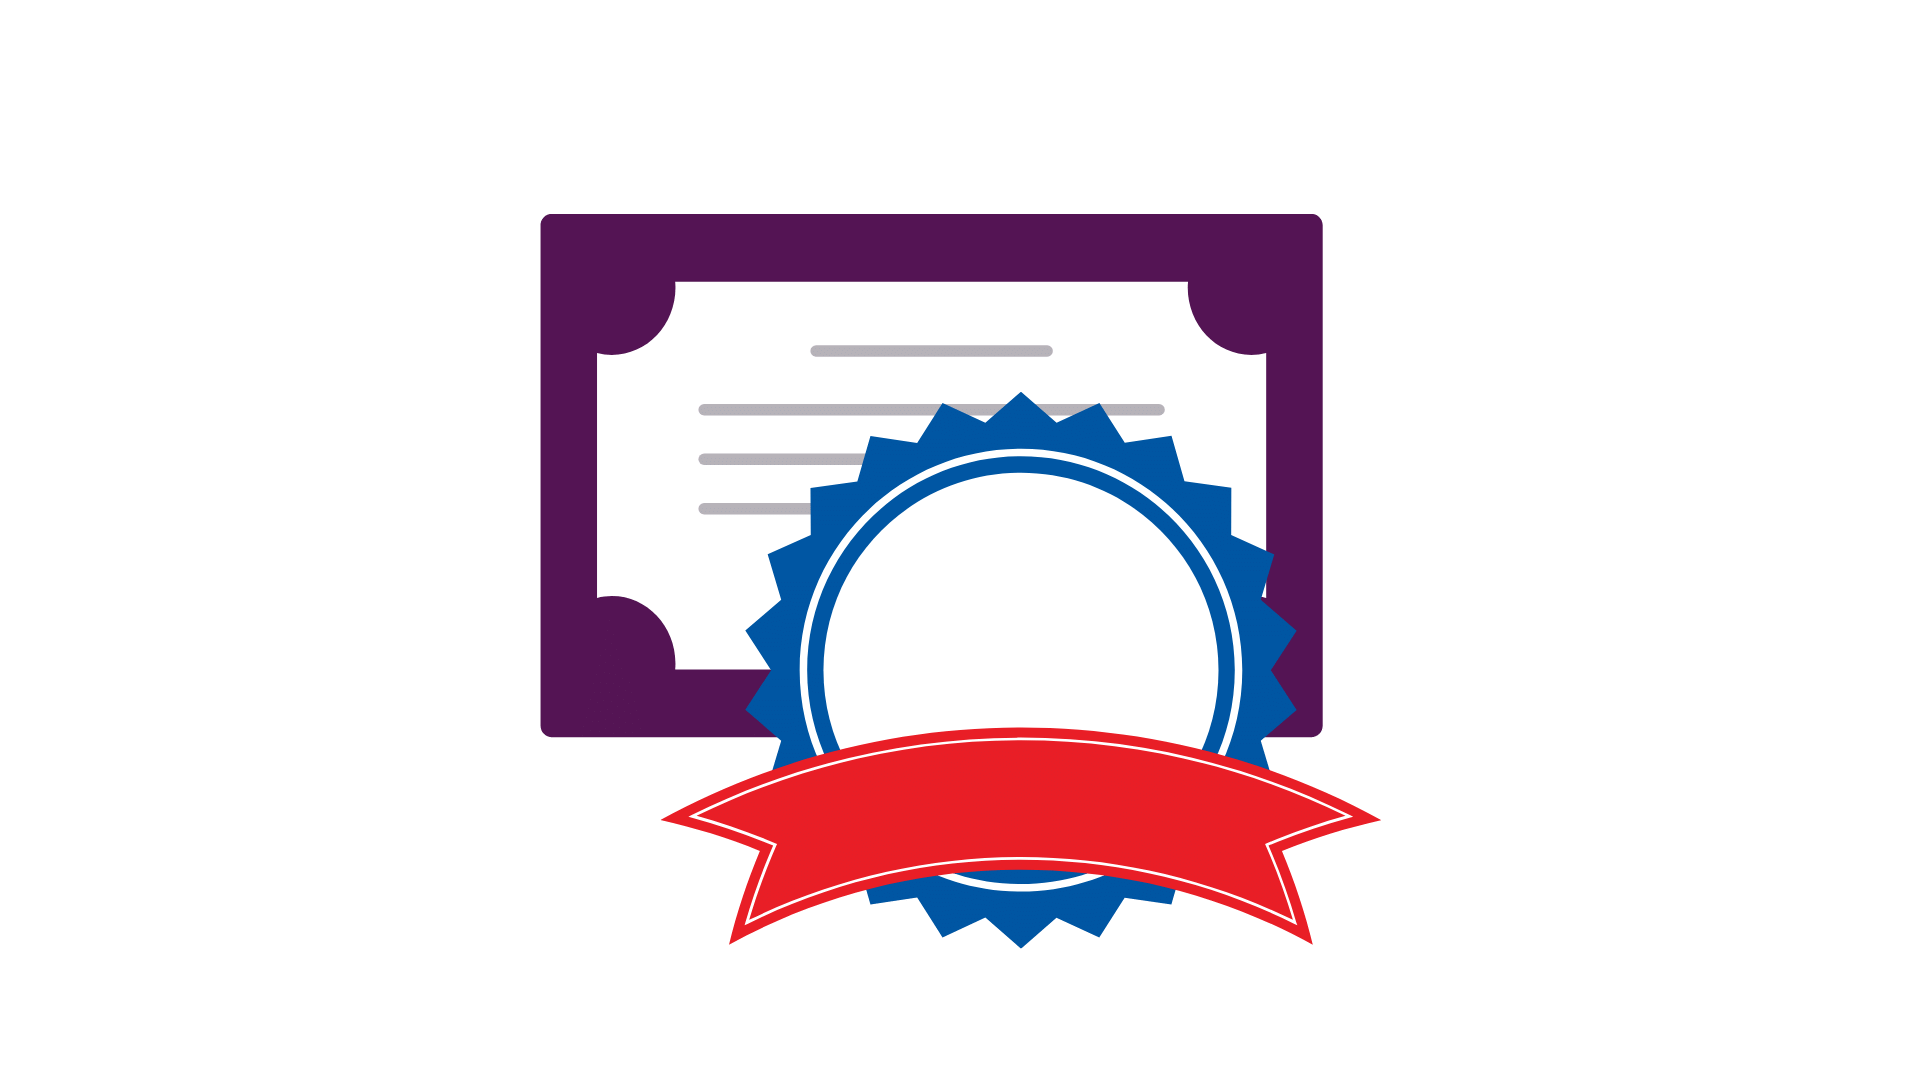 Digital Badges and Certificates